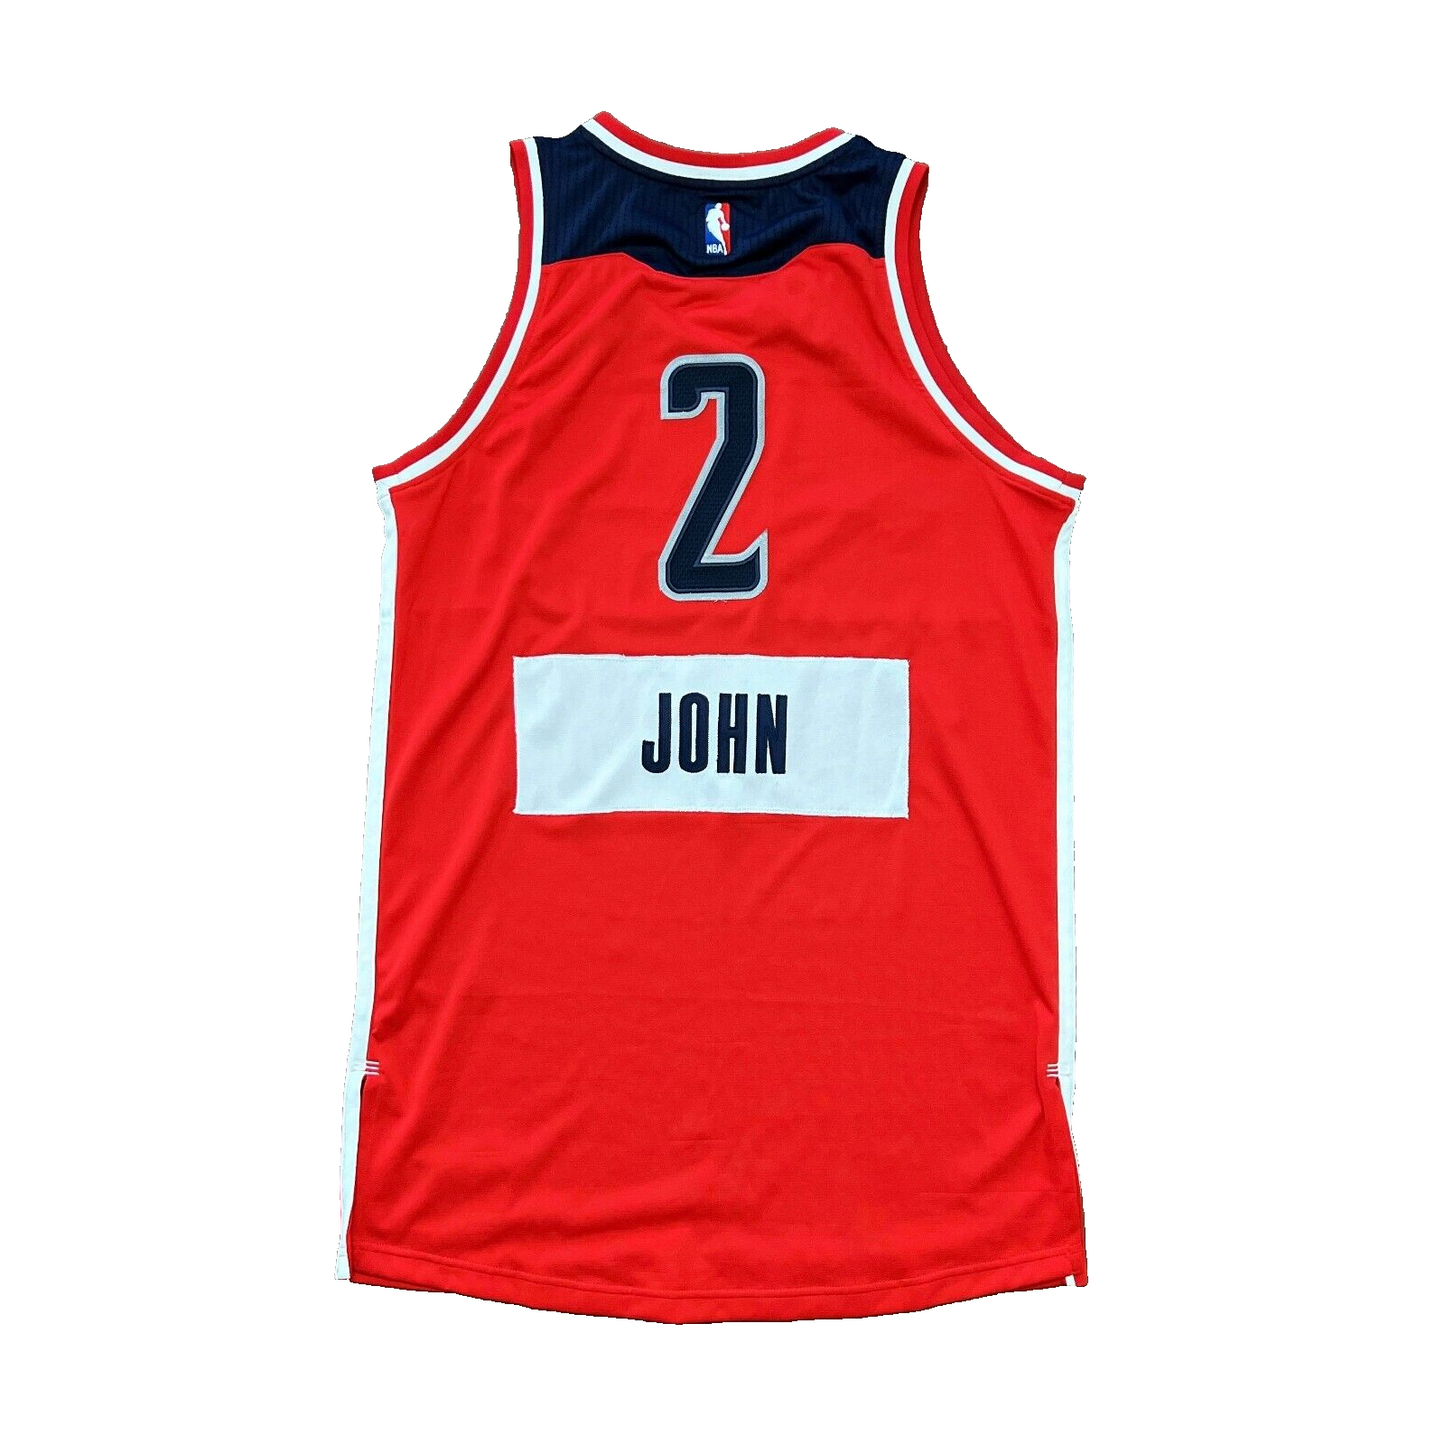 100% Authentic John Wall Adidas Xmas Wizards Jersey Size XL 48 Pro Cut Mesh #